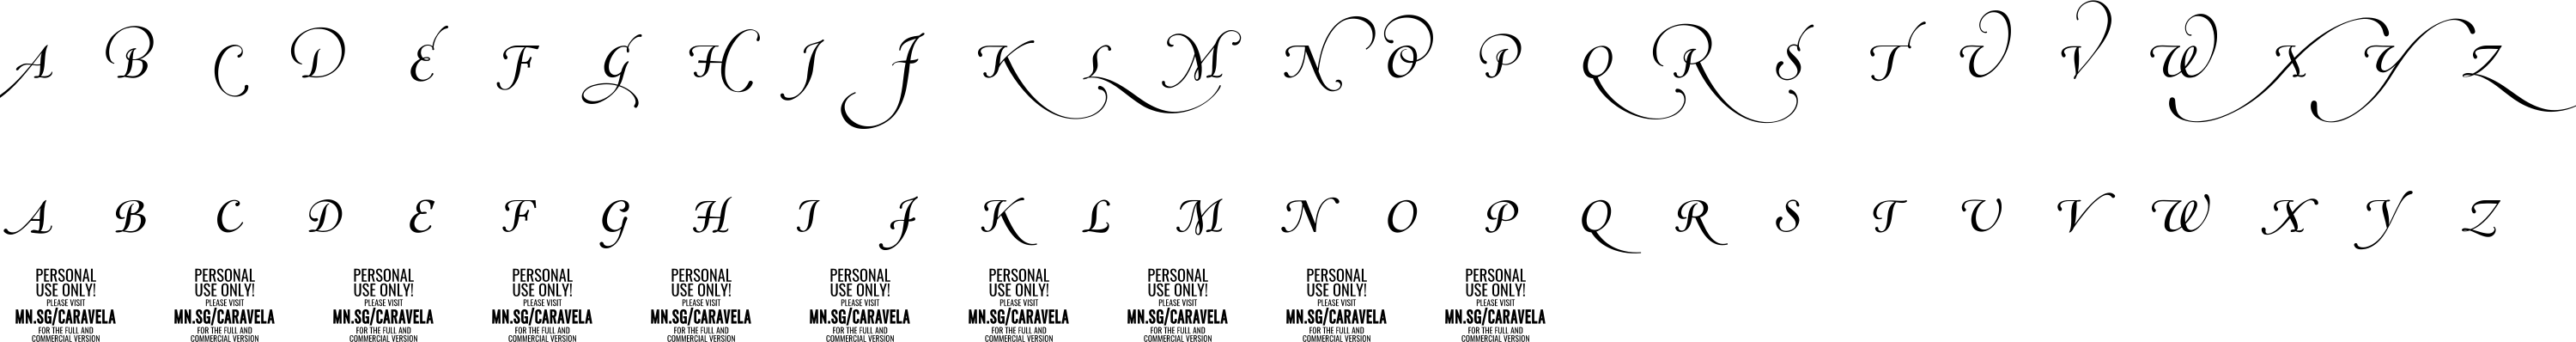 Caravela Character Map